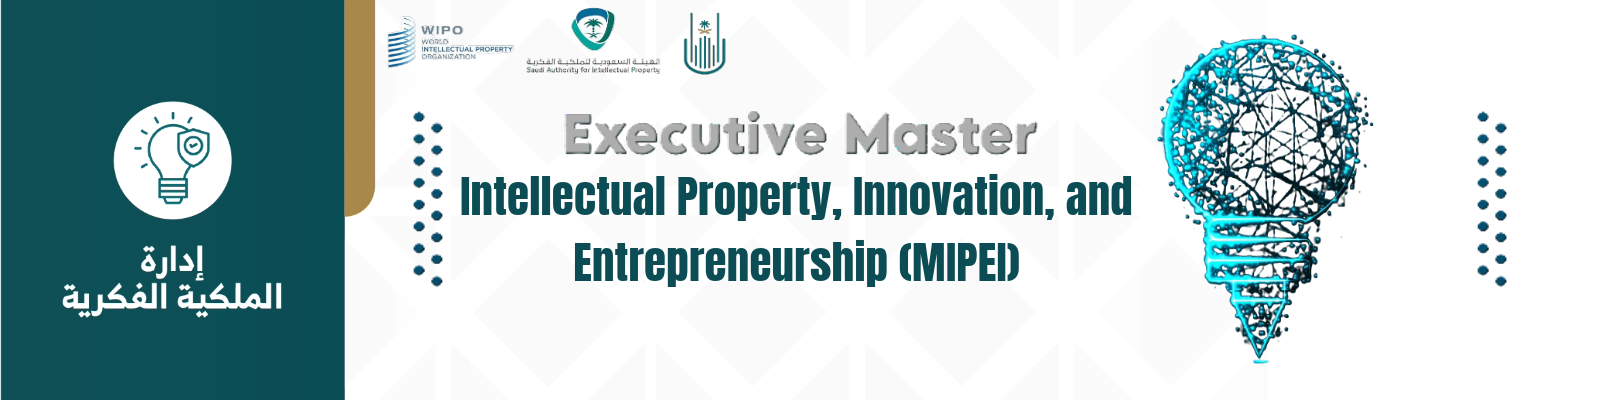 Executive Master in Intellectual Property, Innovation, and Entrepreneurship (MIPEI)